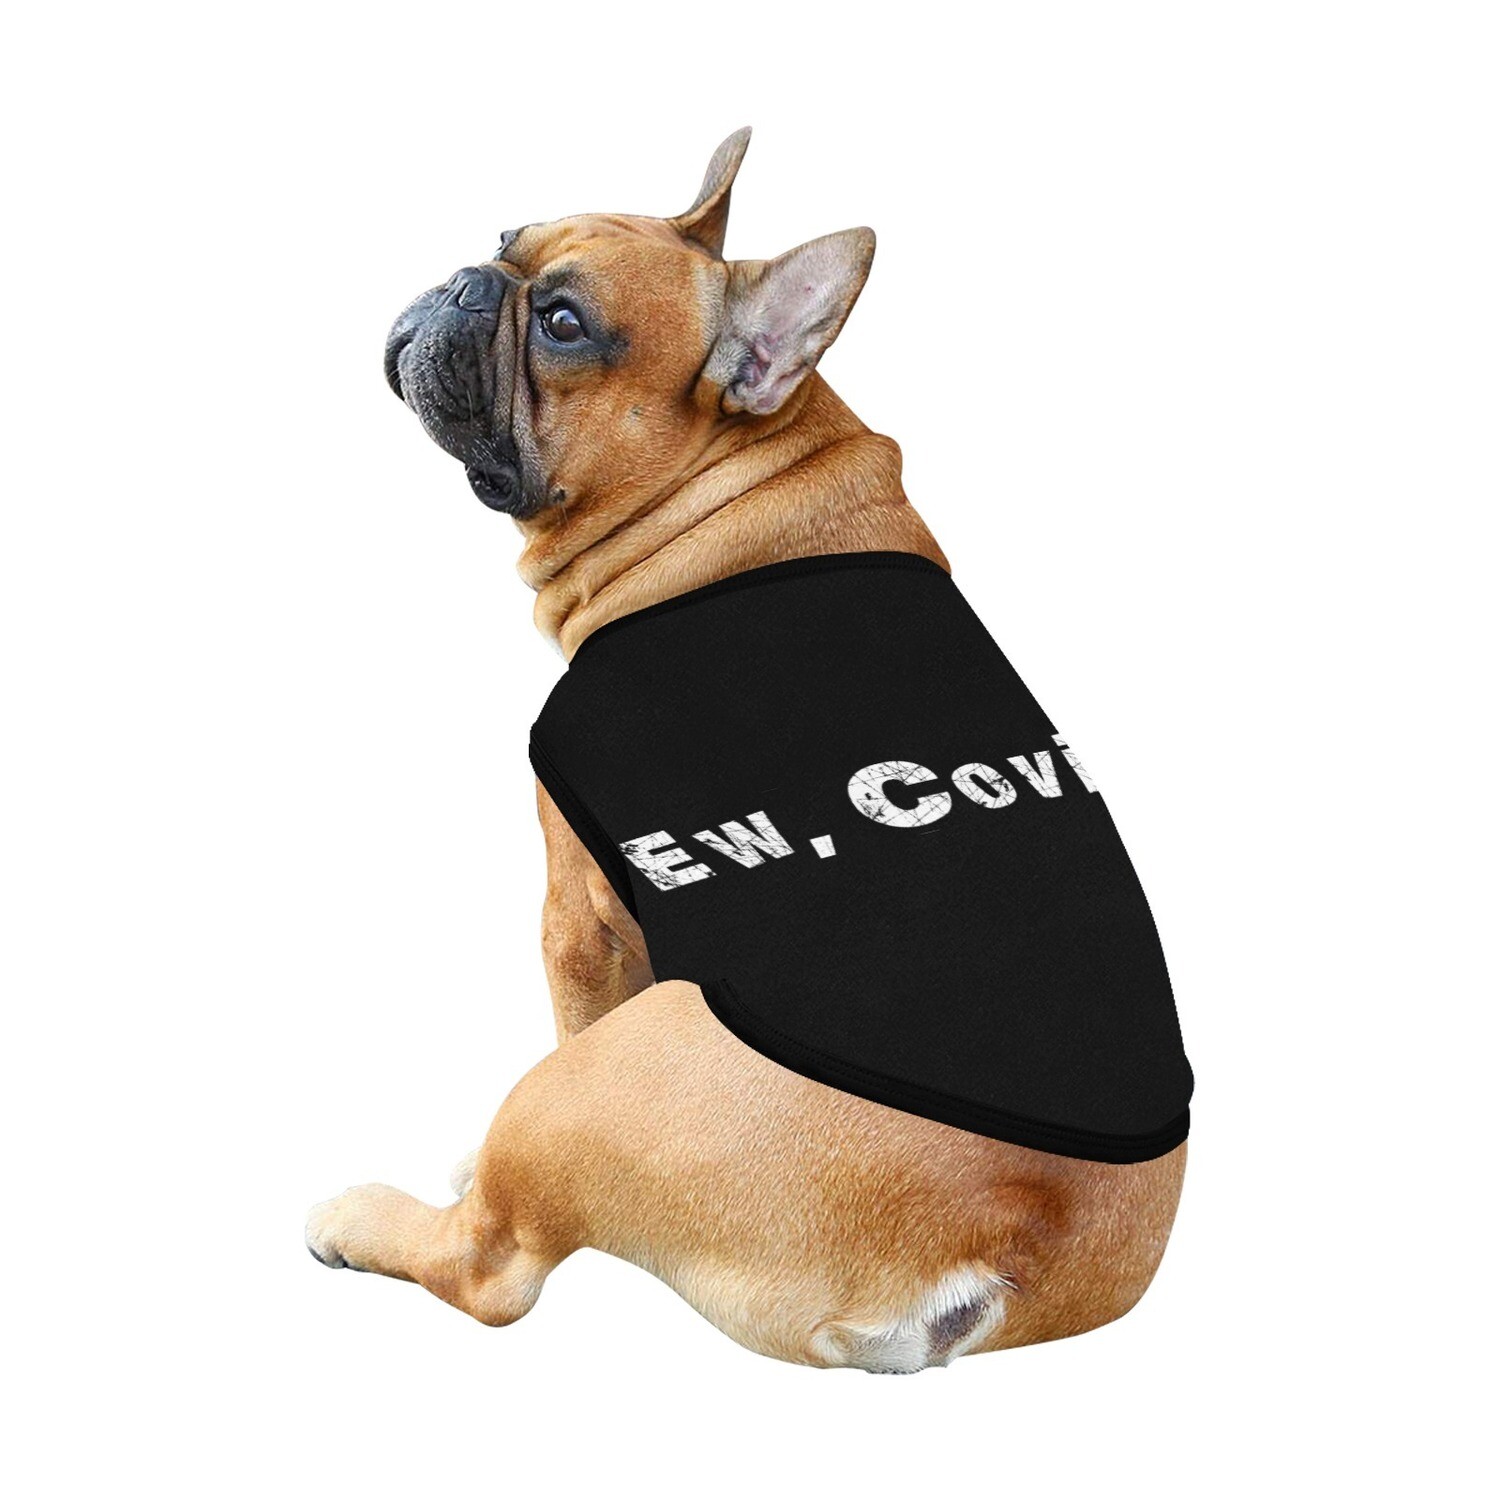 🐕 David Rose Ew, Covid Dog t-shirt, Dog Tank Top, Dog shirt, Dog clothes, Gifts, front back print, 7 sizes XS to 3XL, Schitt's Creek, TV series